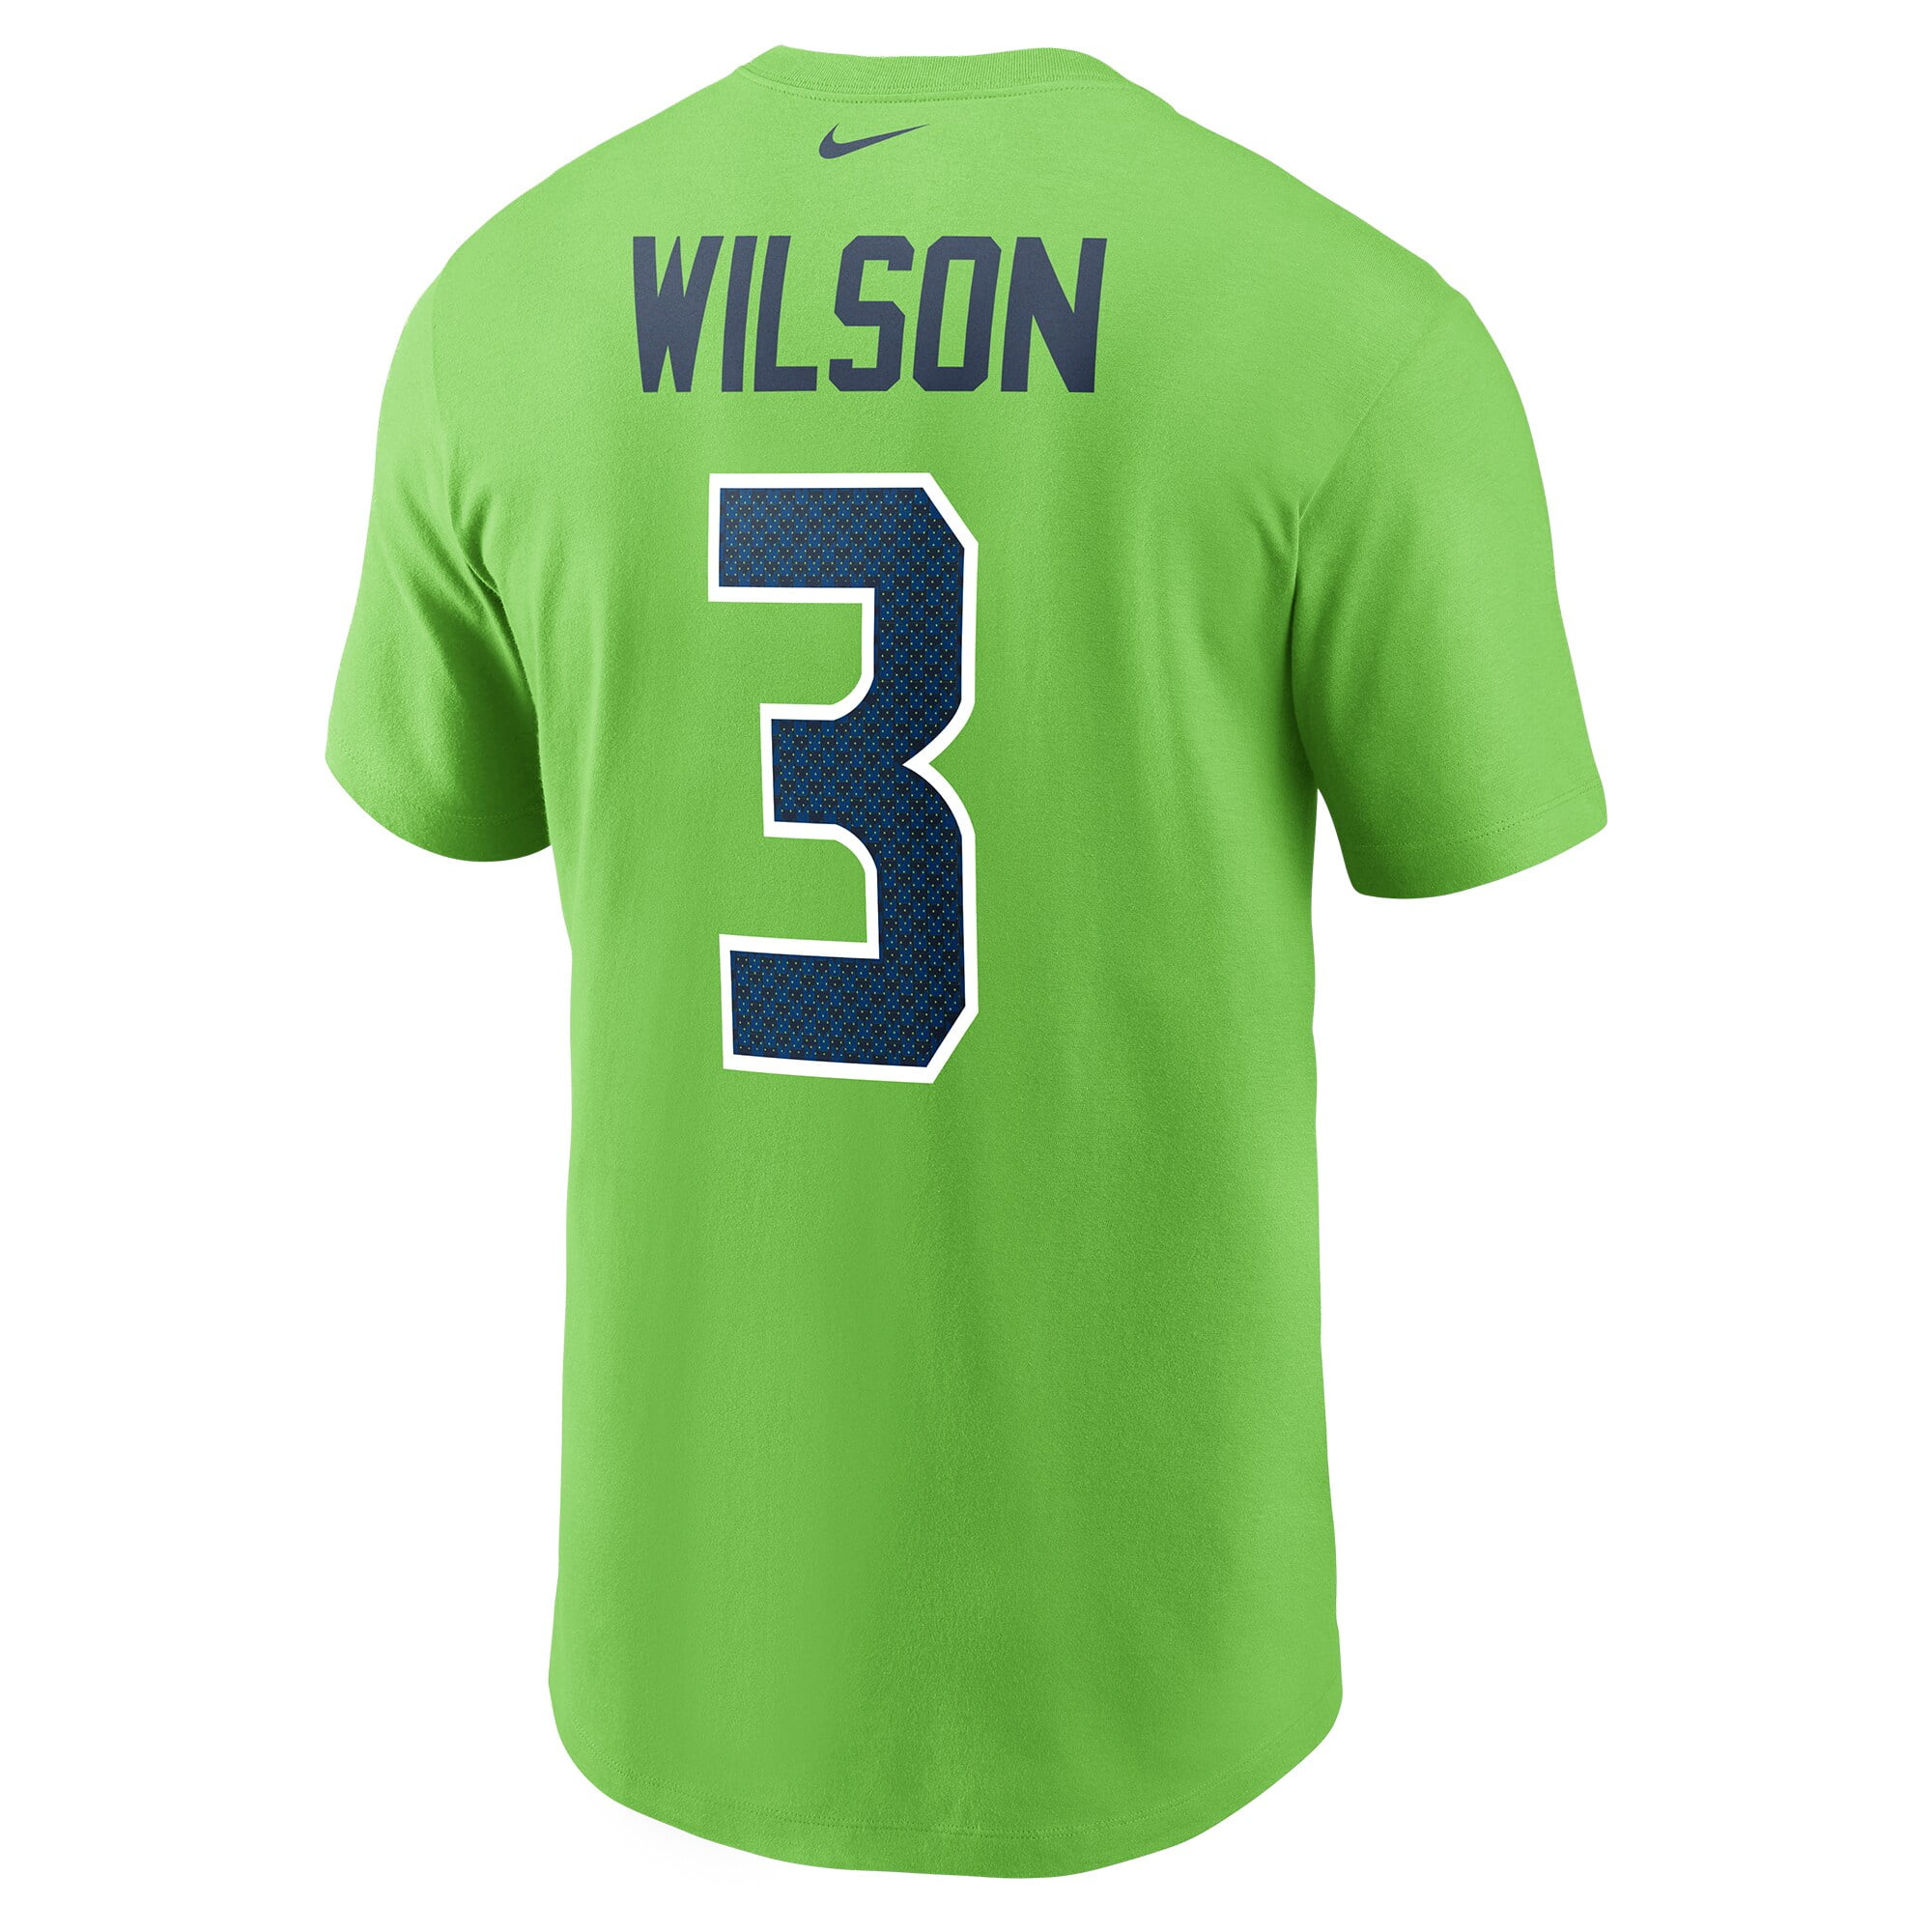 russell wilson nike shirt